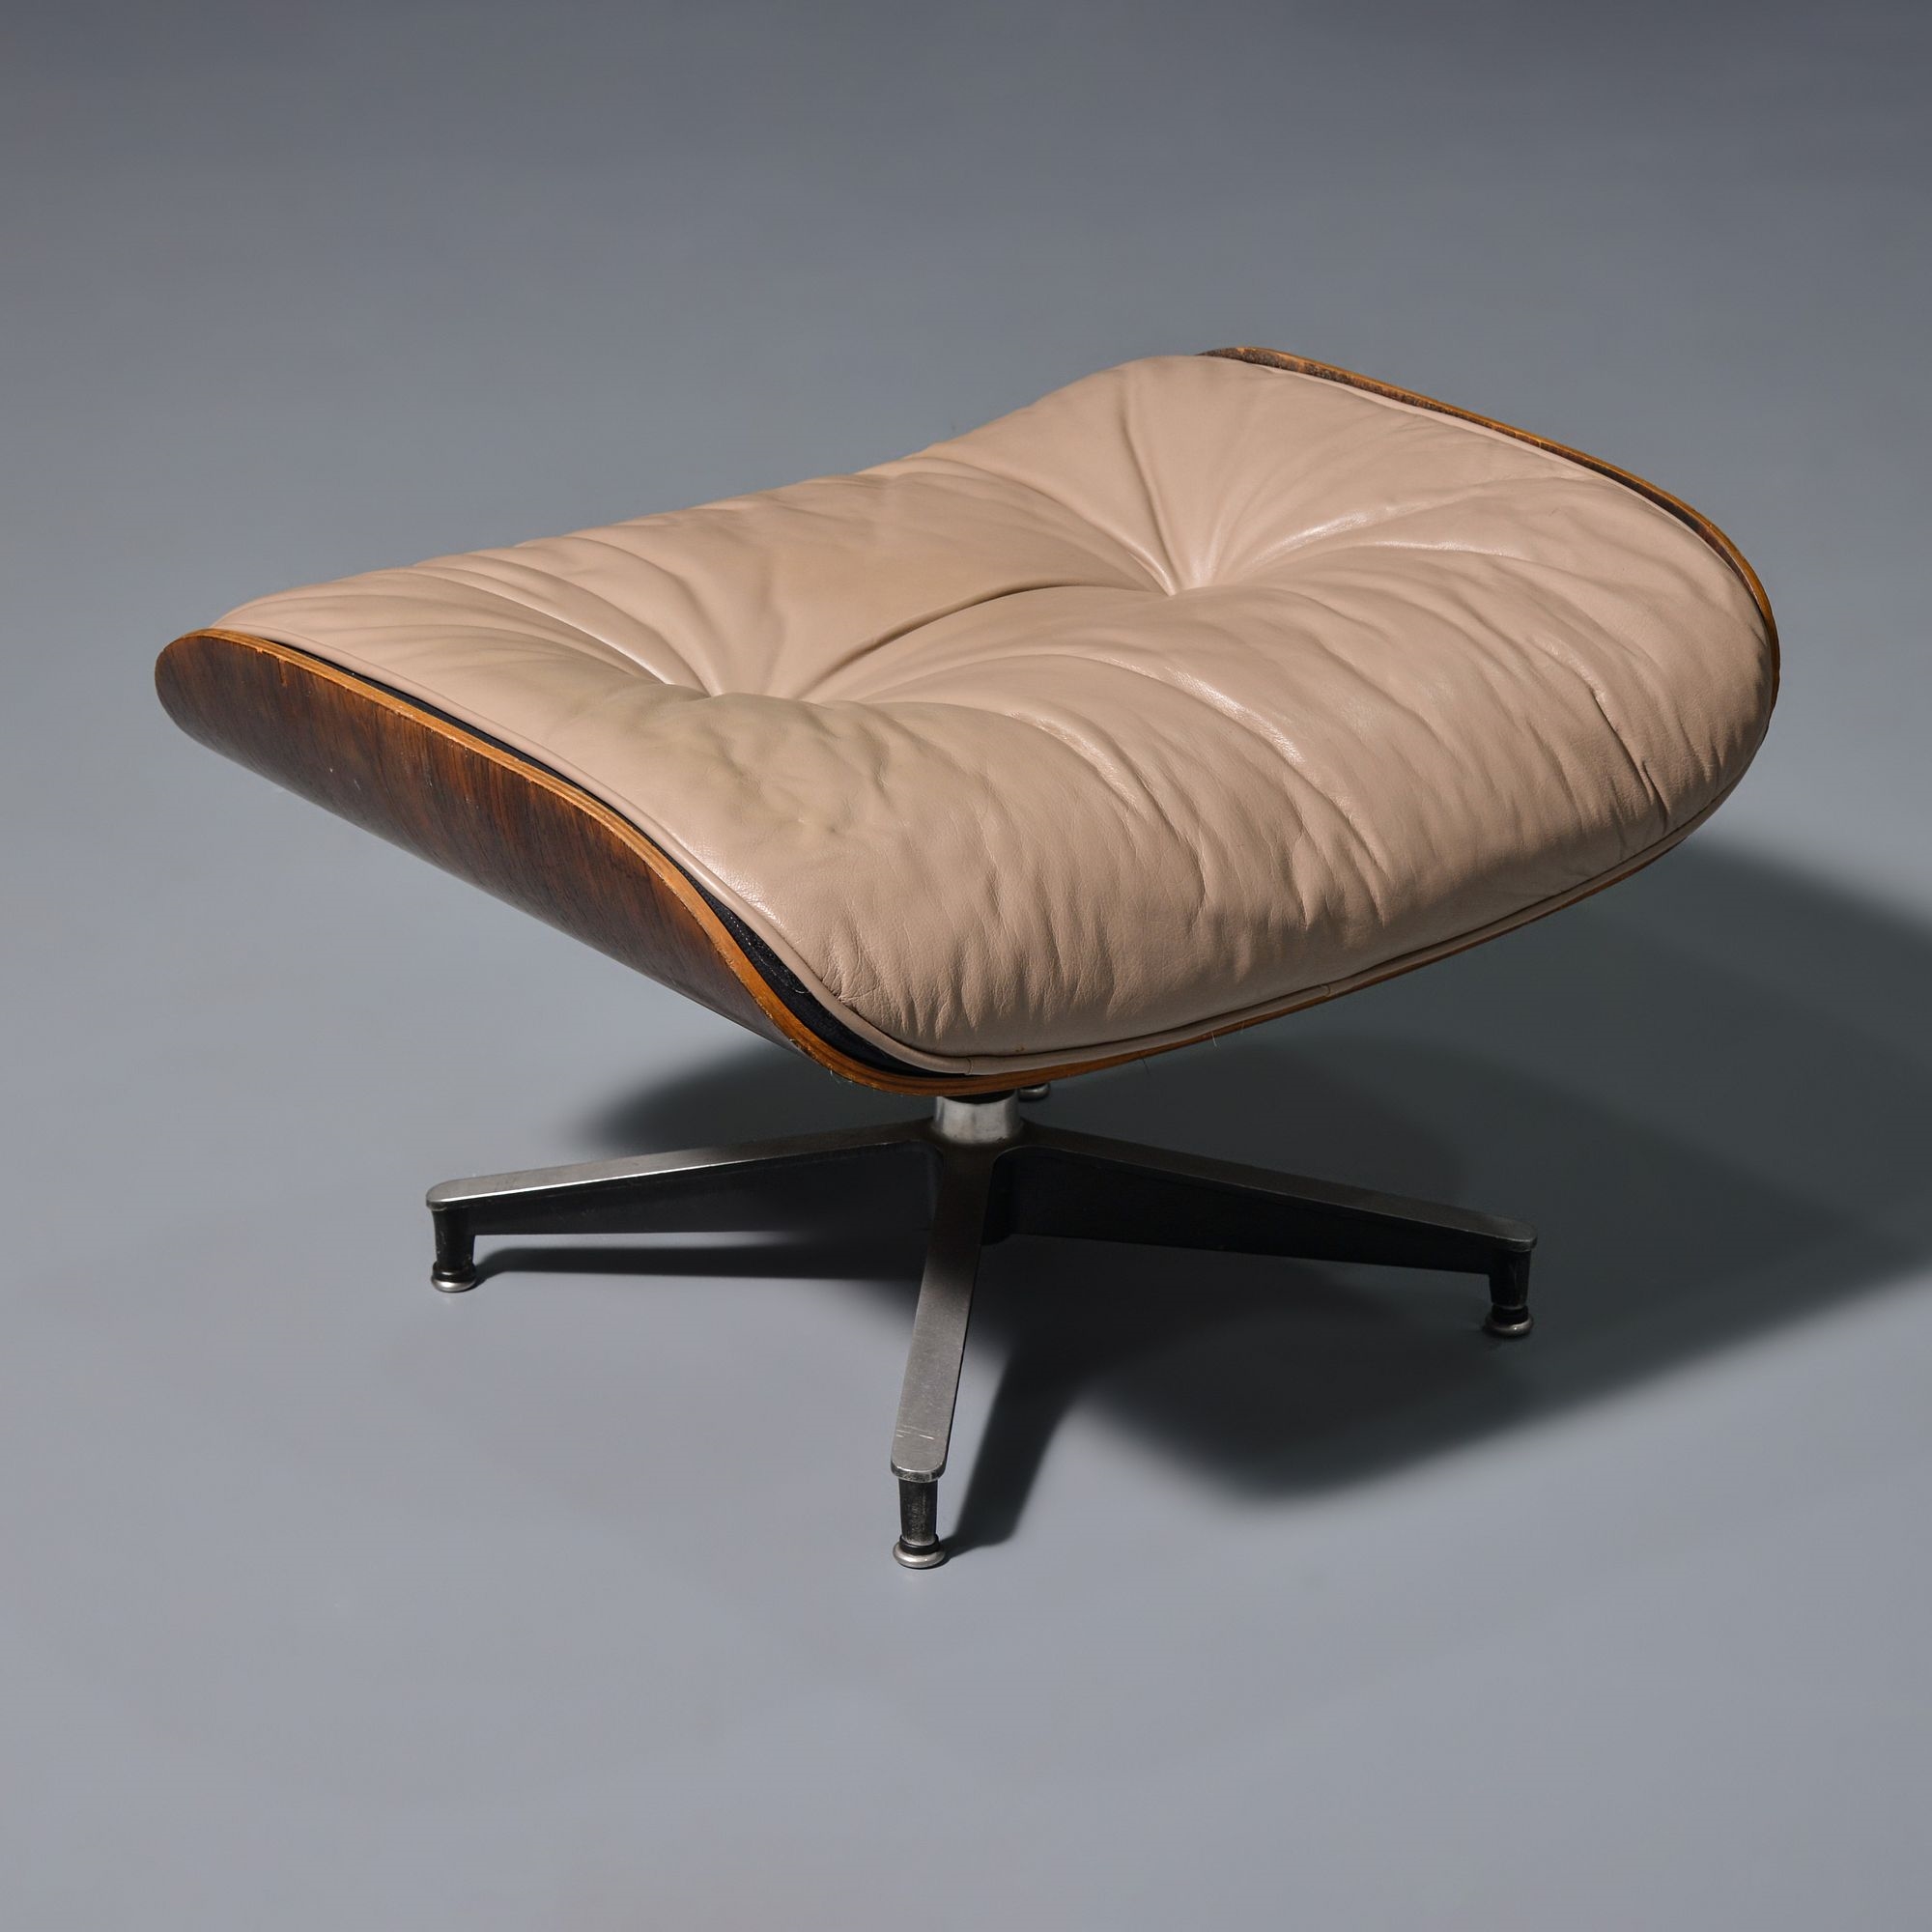 Charles Eames | Charles & Ray Eames Lounge Chair & Ottoman | MutualArt